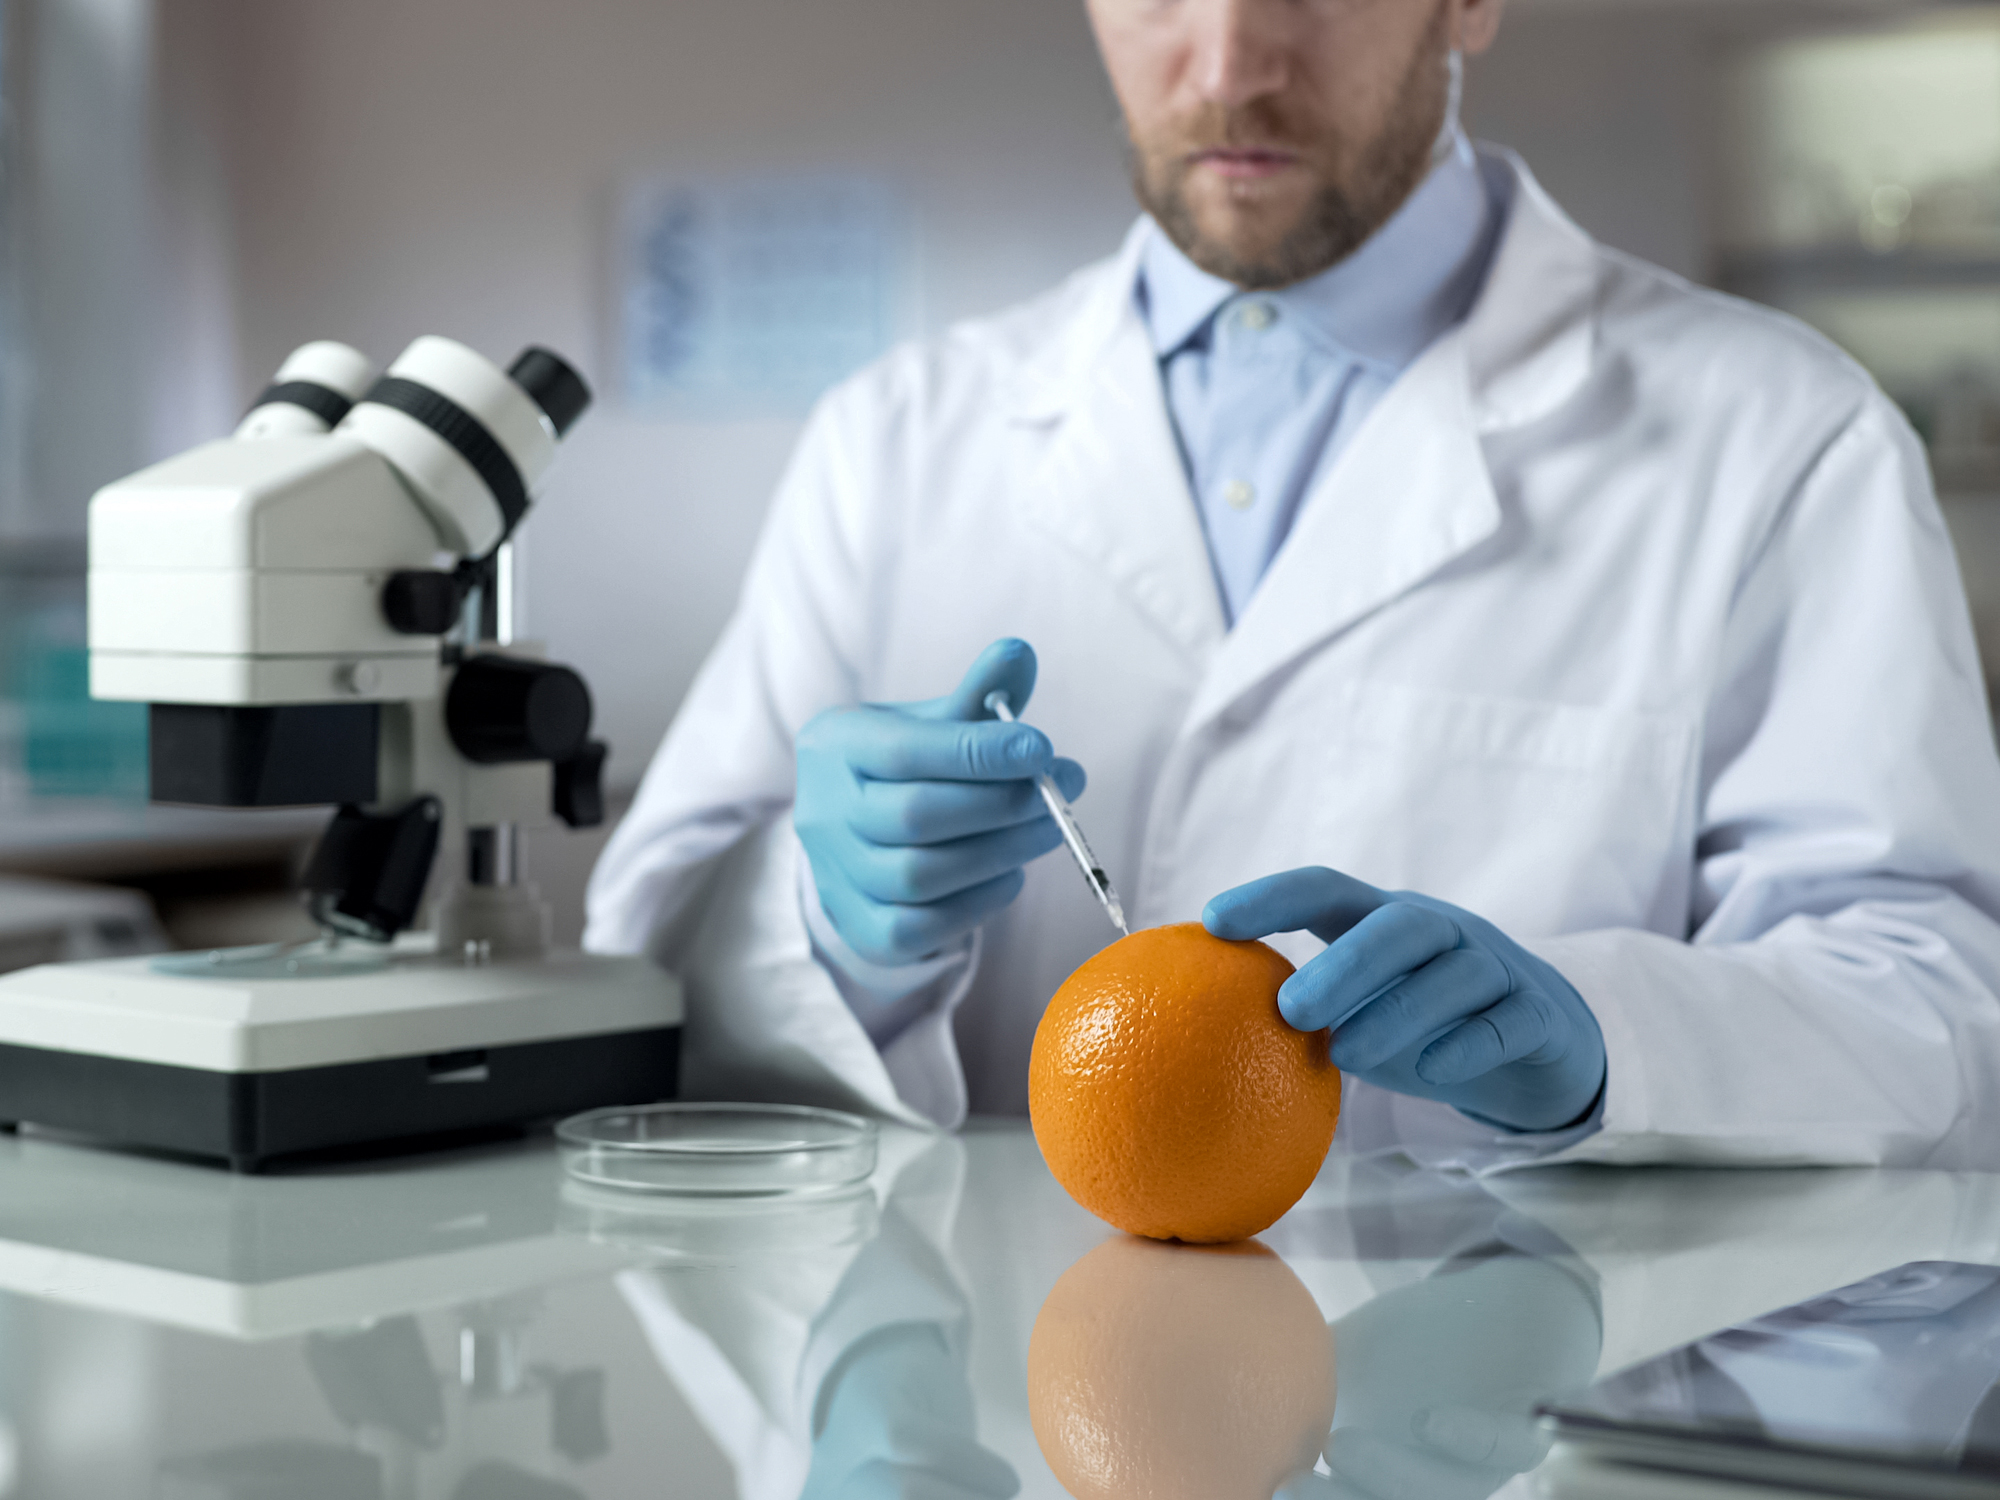 Tired of antibiotics in your food? Oranges are next